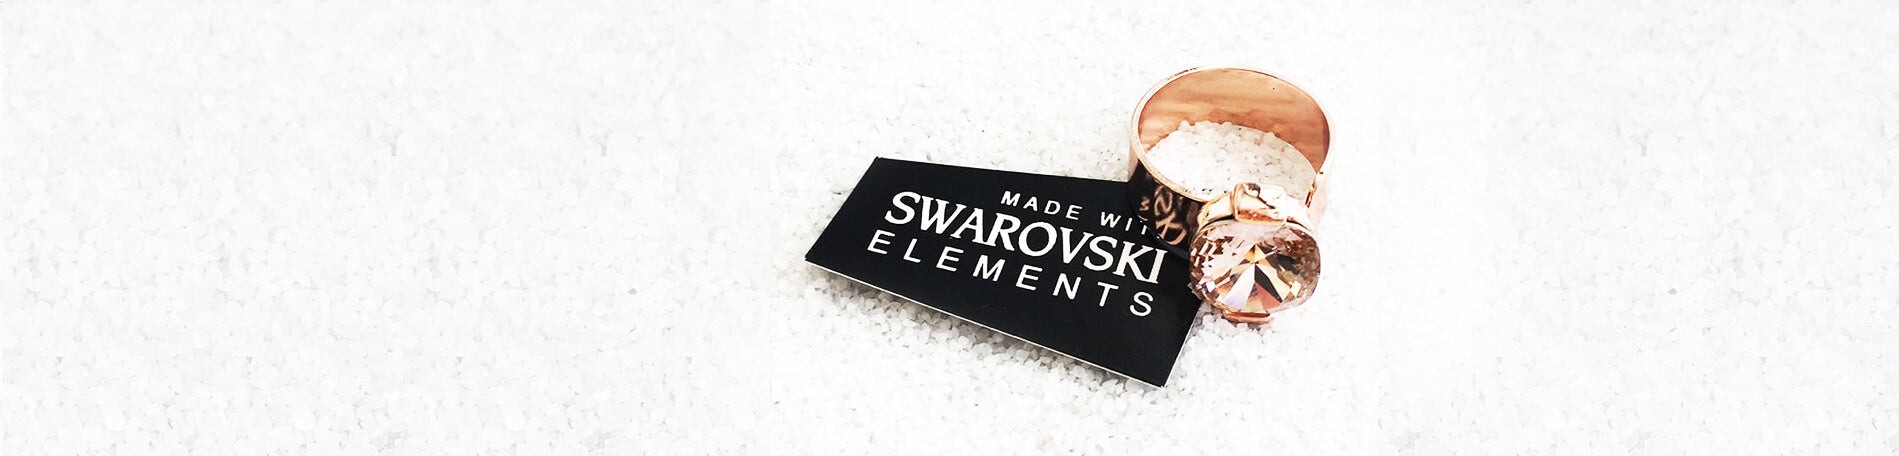 Swarovski News | What is going on with Swarovski Crystals | Rose Gold Swarovski Ring | Bidiliia